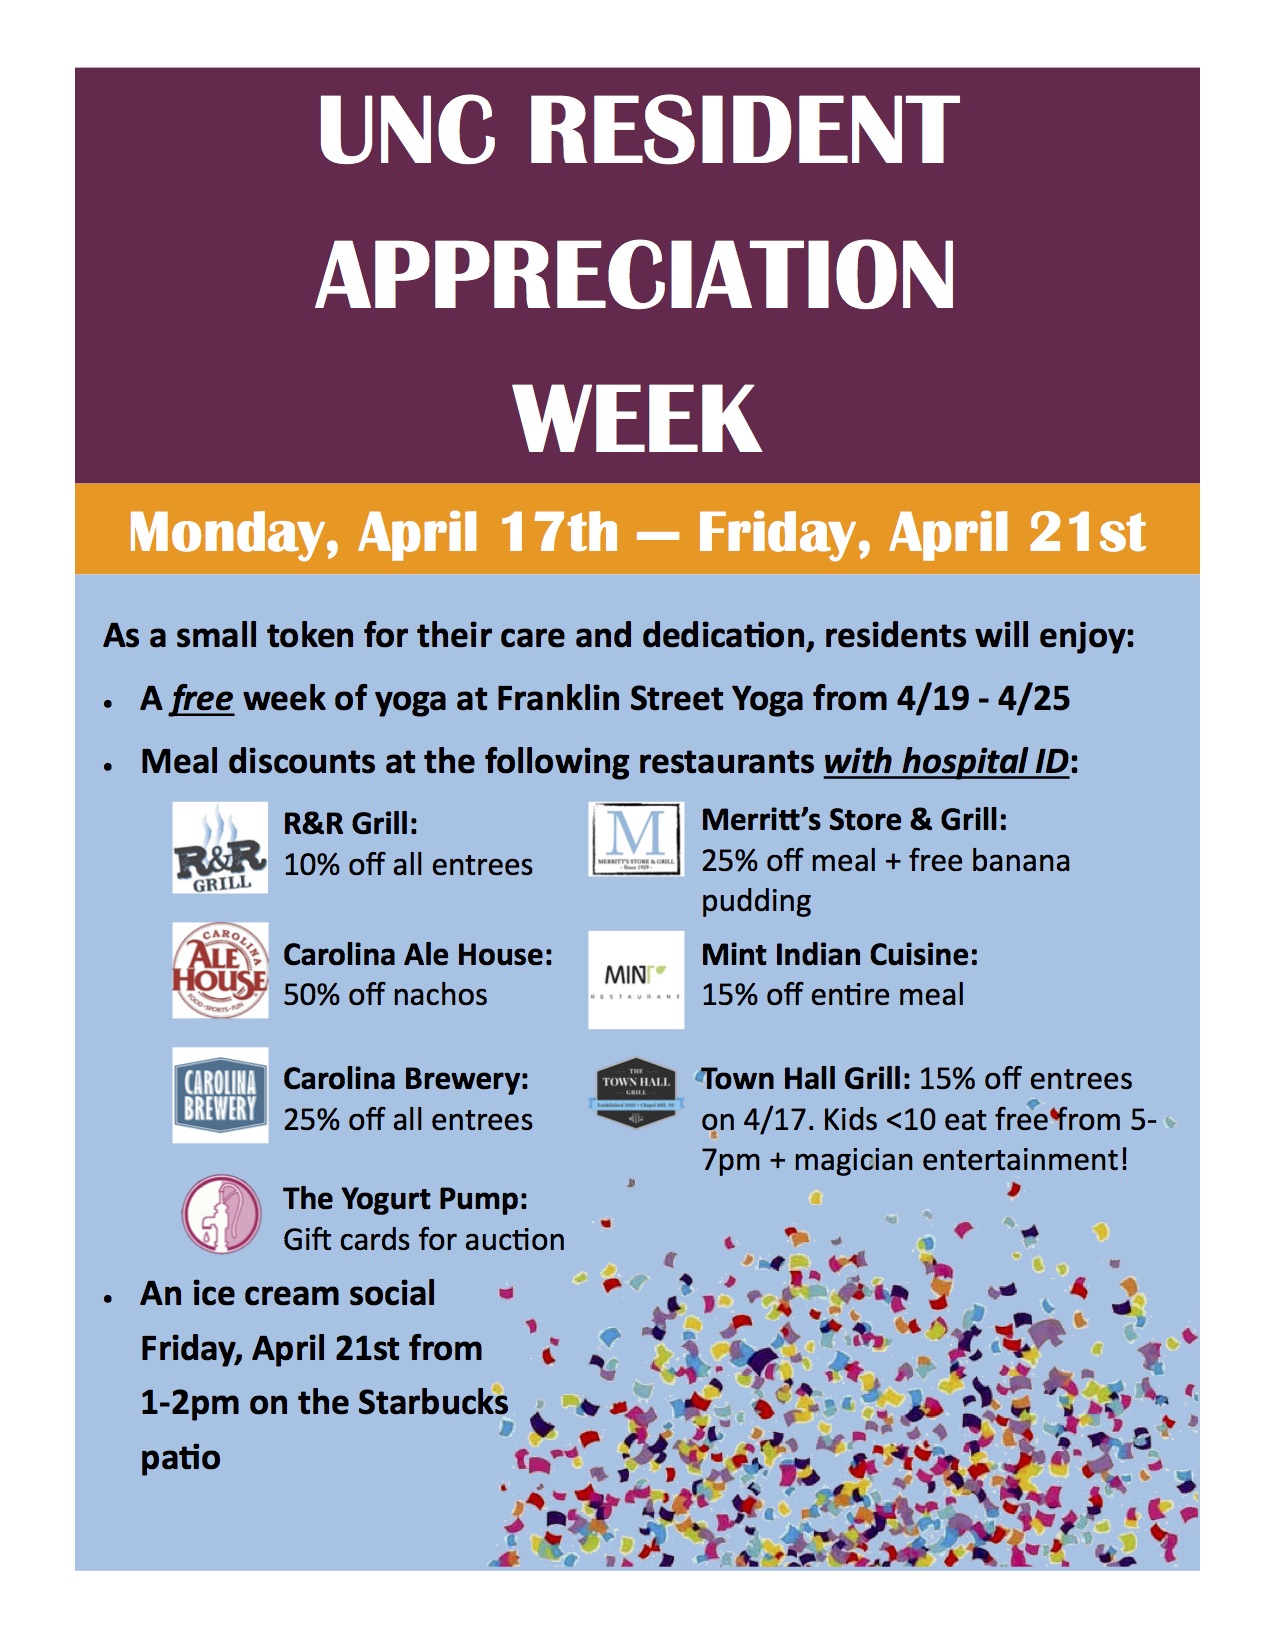 UNC Resident Appreciation Week Newsroom